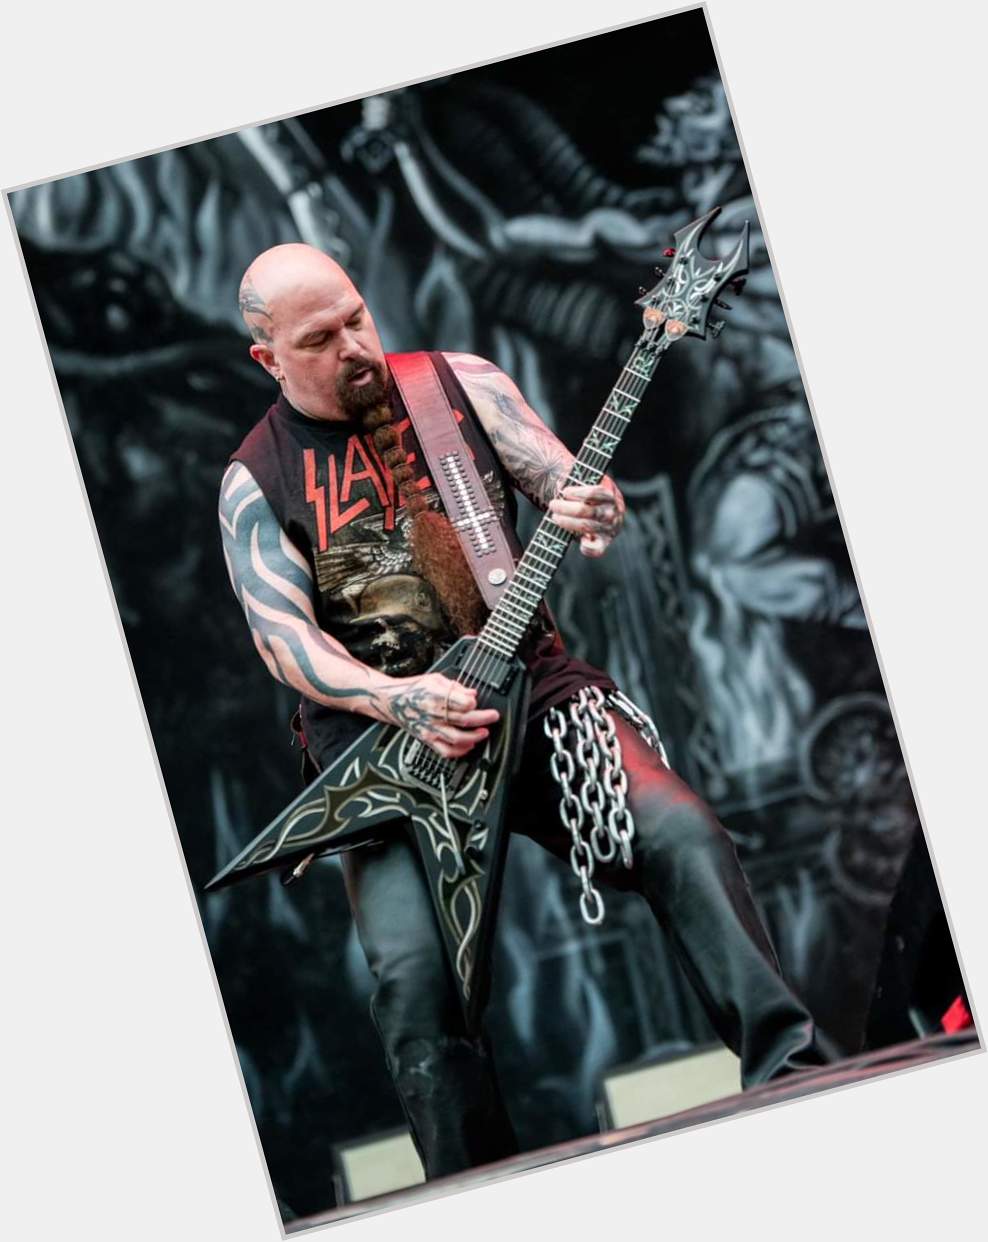 Happy Birthday to Slayer guitarist Kerry King! 